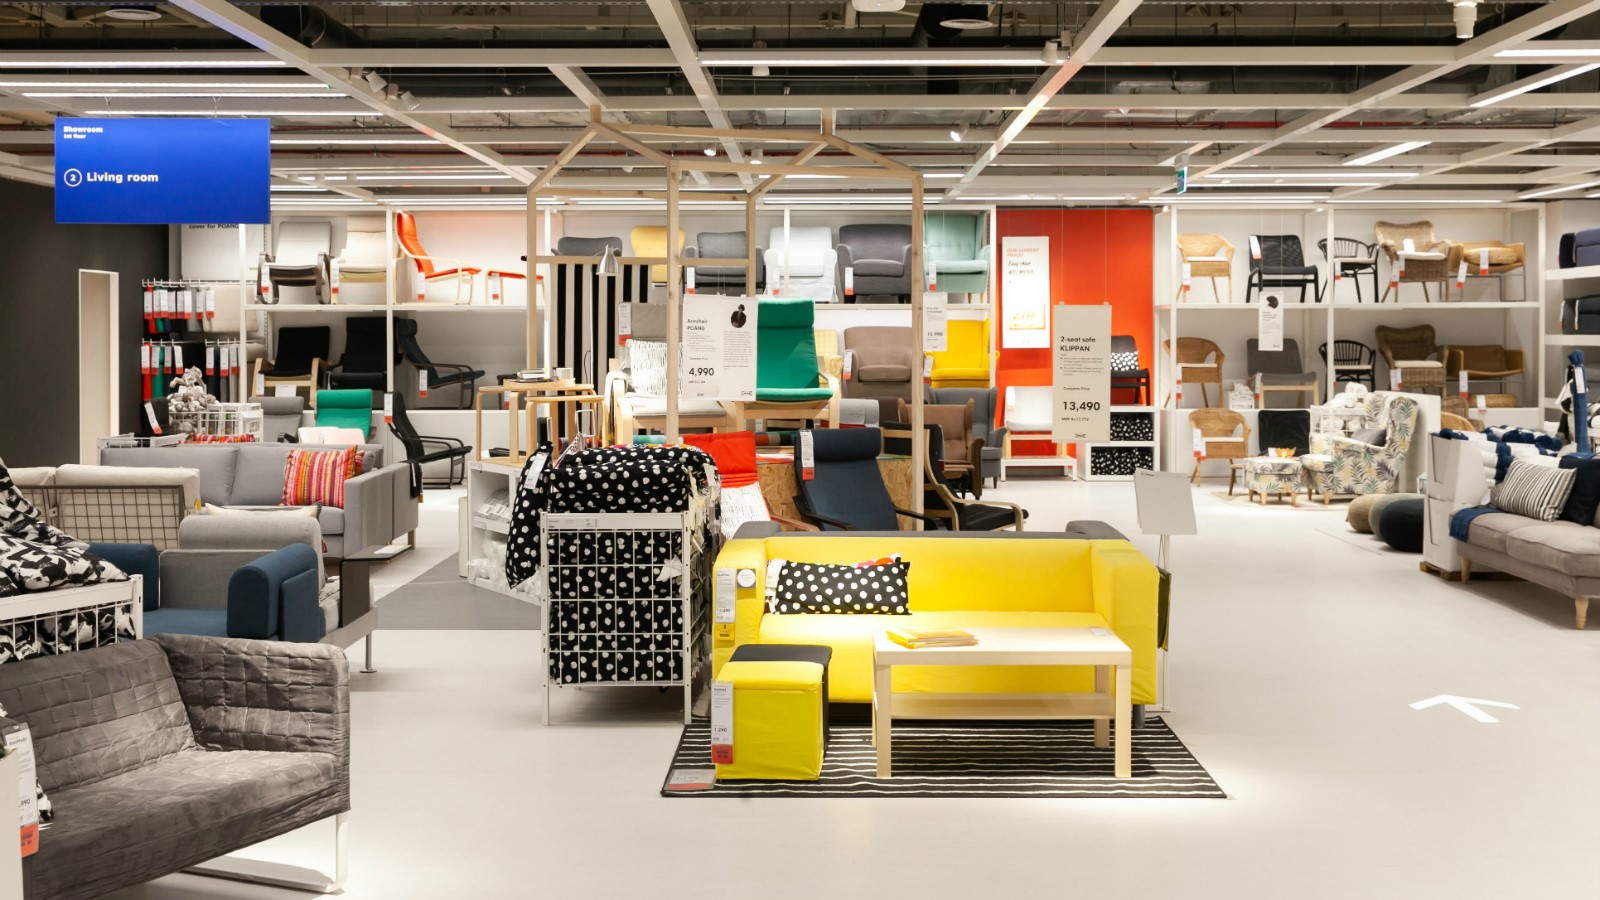 Industrial design elements in retail interiors